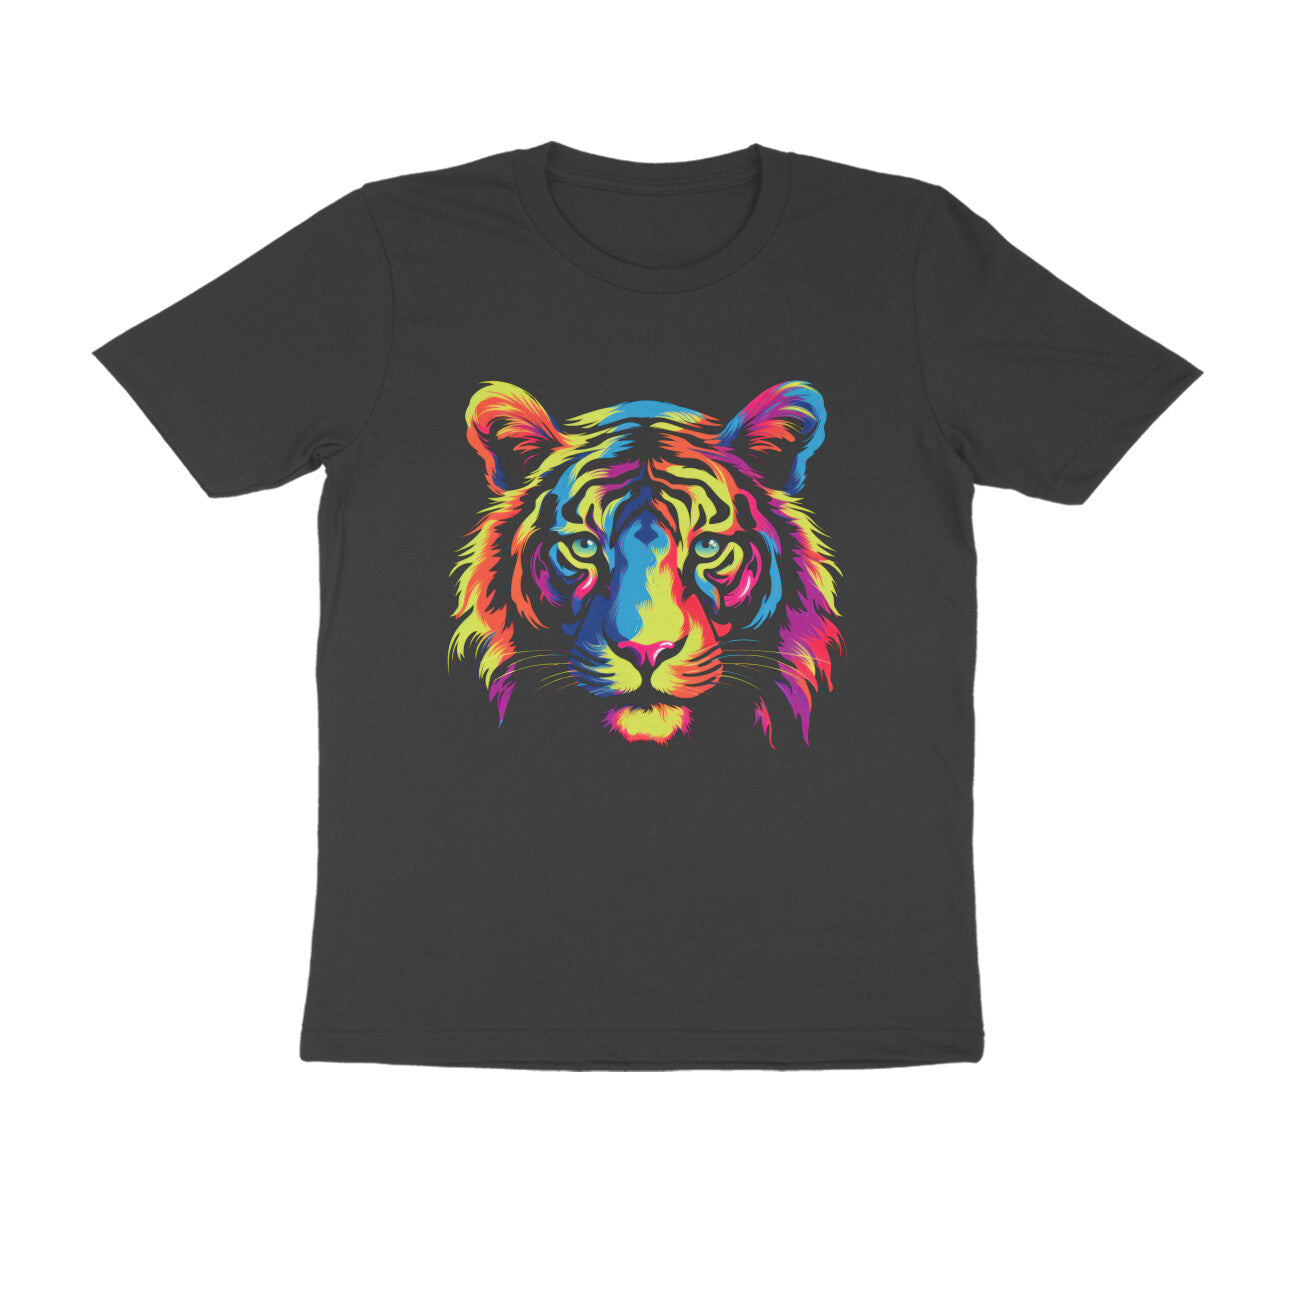 Men's Half Sleeve Round Neck Rainbow Tiger T-Shirt